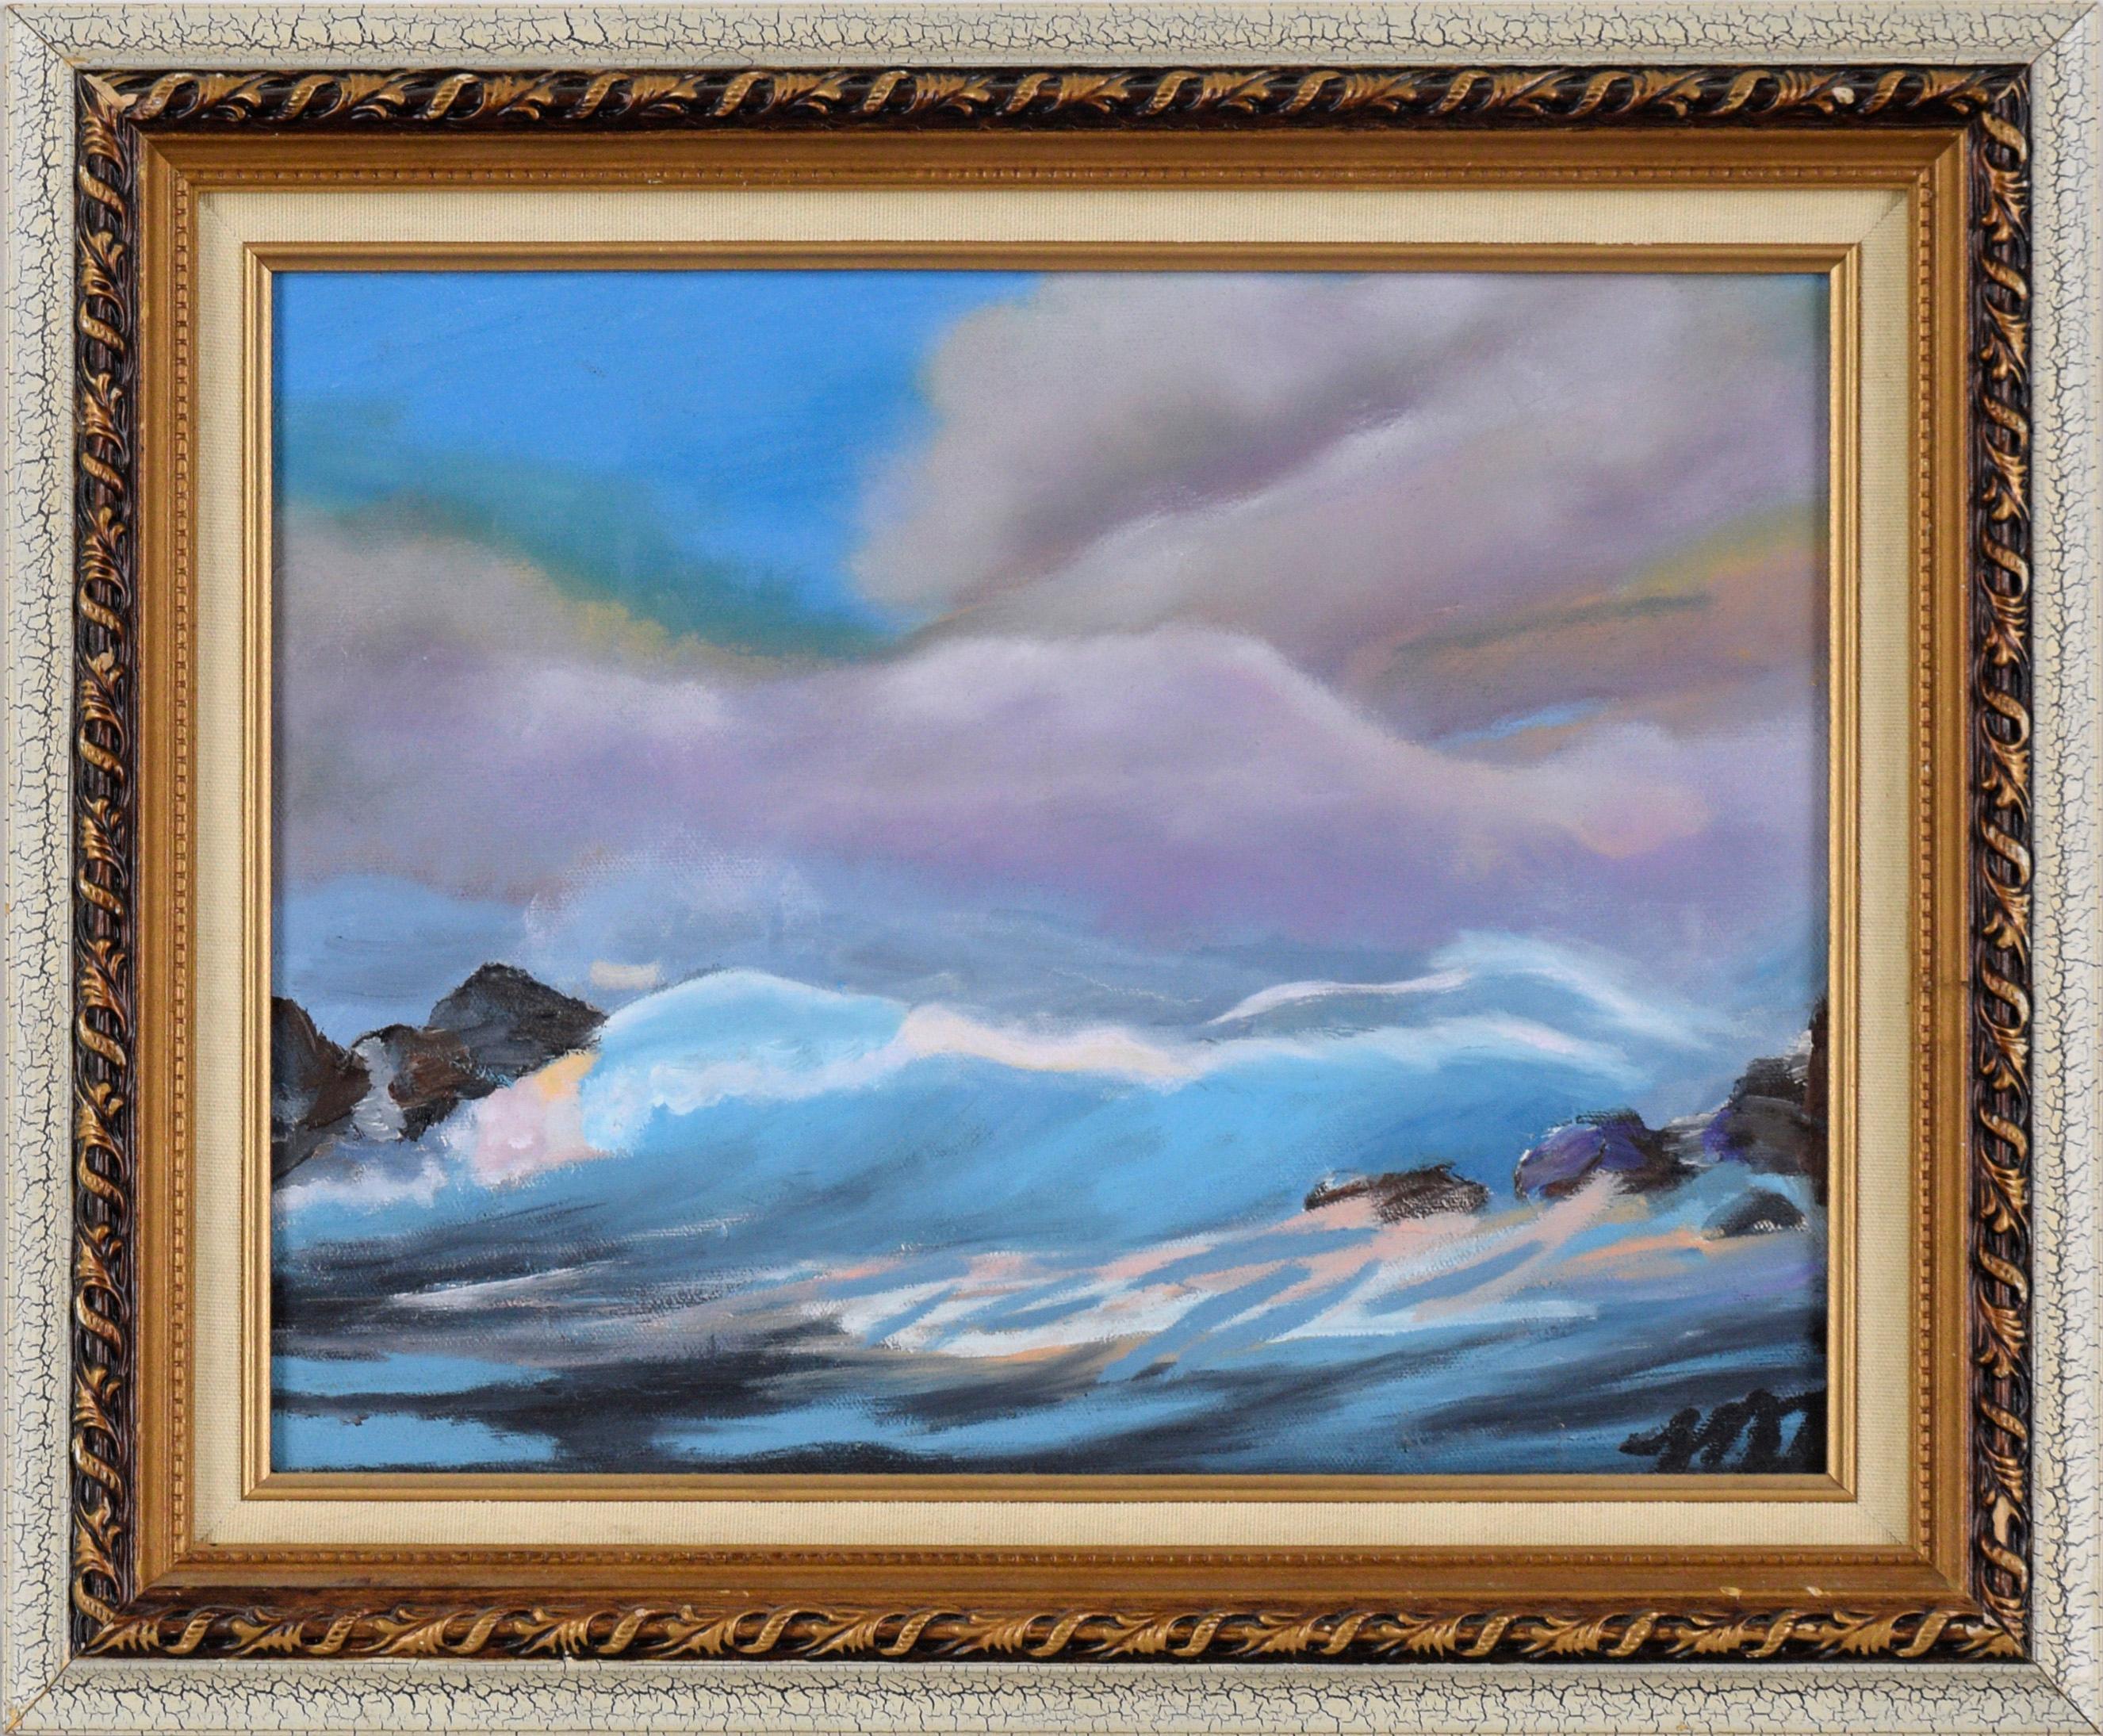 Mai Tracy Kikuchi Landscape Painting - Waves Crashing Under Purple Clouds - Seascape Original Oil on Canvas